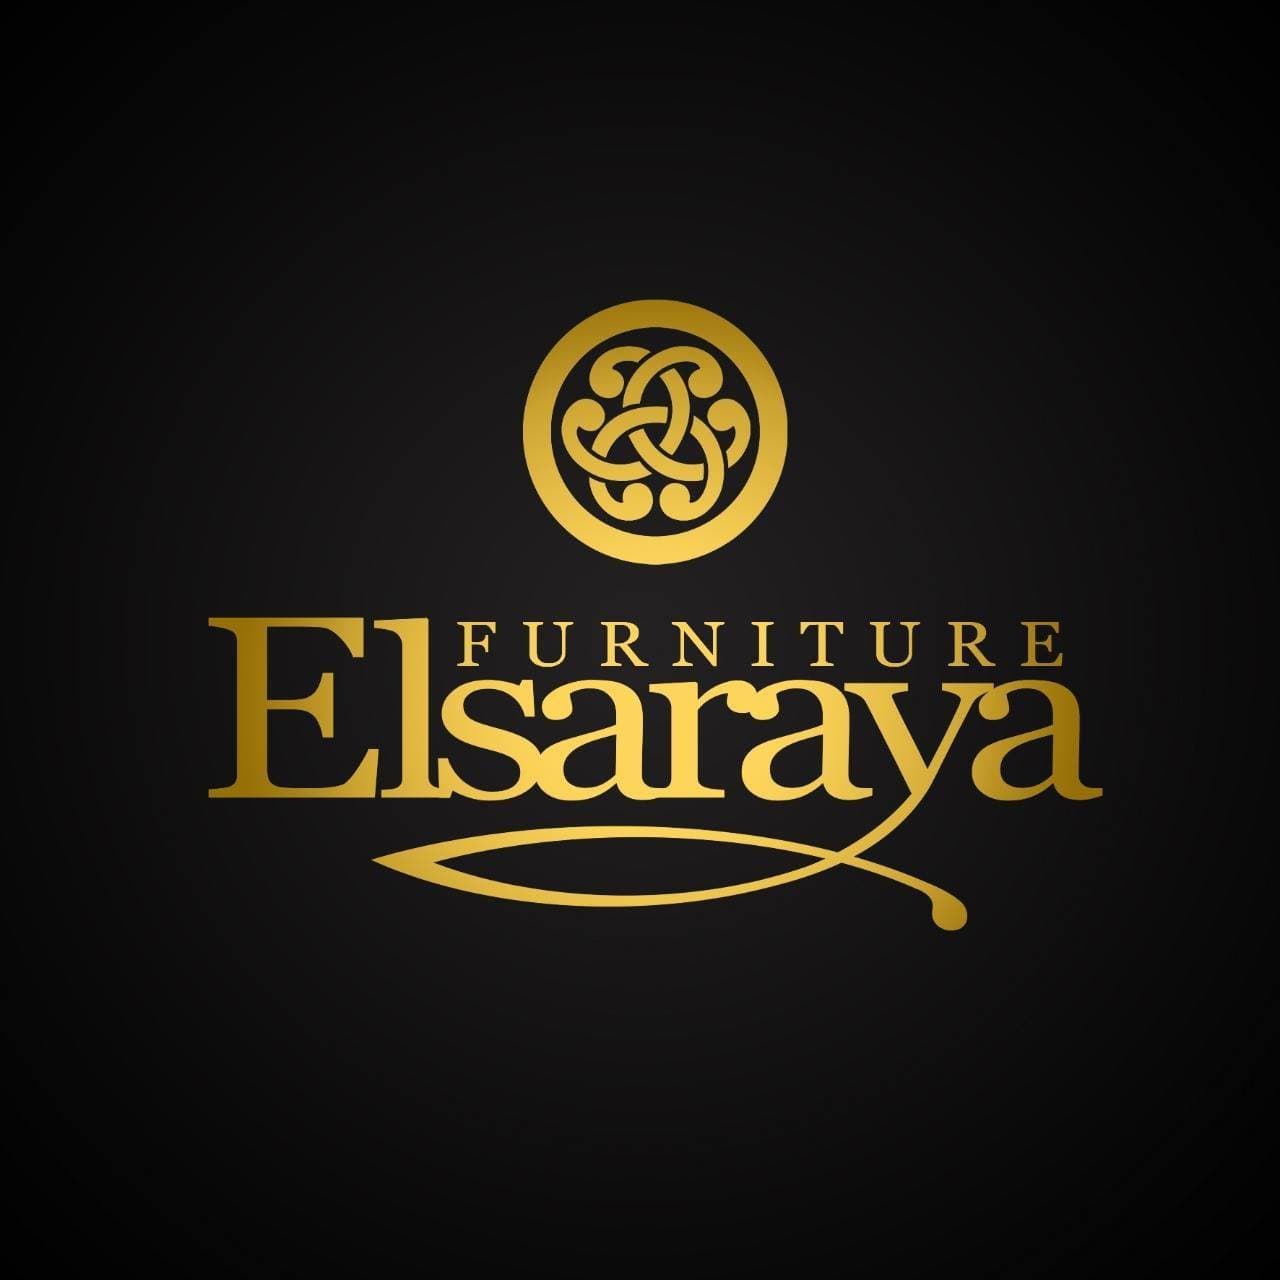 Elsaraya Furniture 